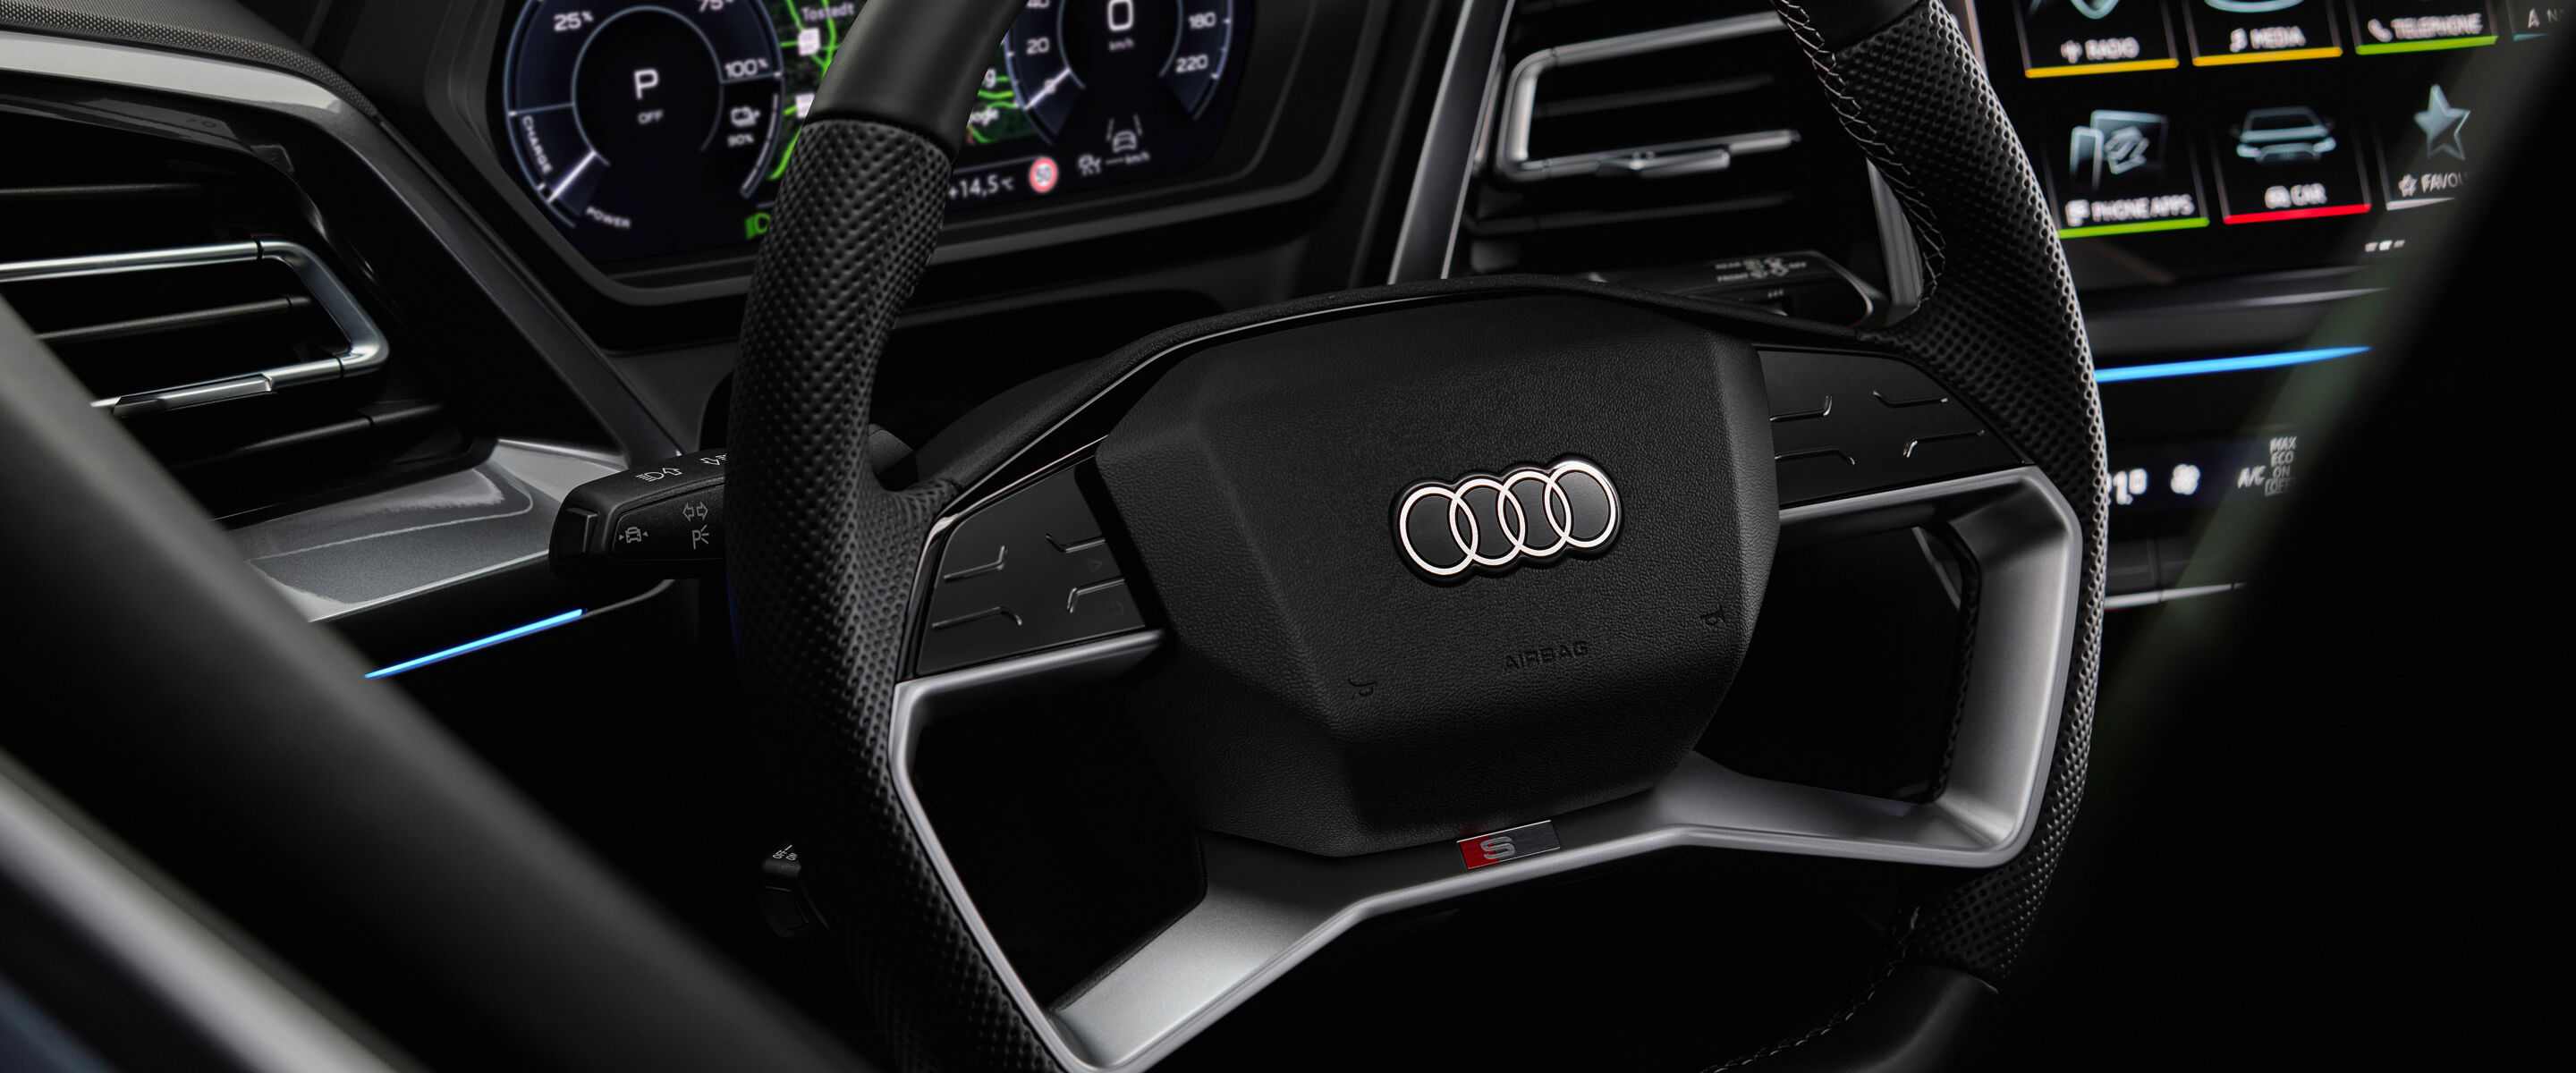 Audi Q4 e-tron krijgt interieur met innovatieve technologie